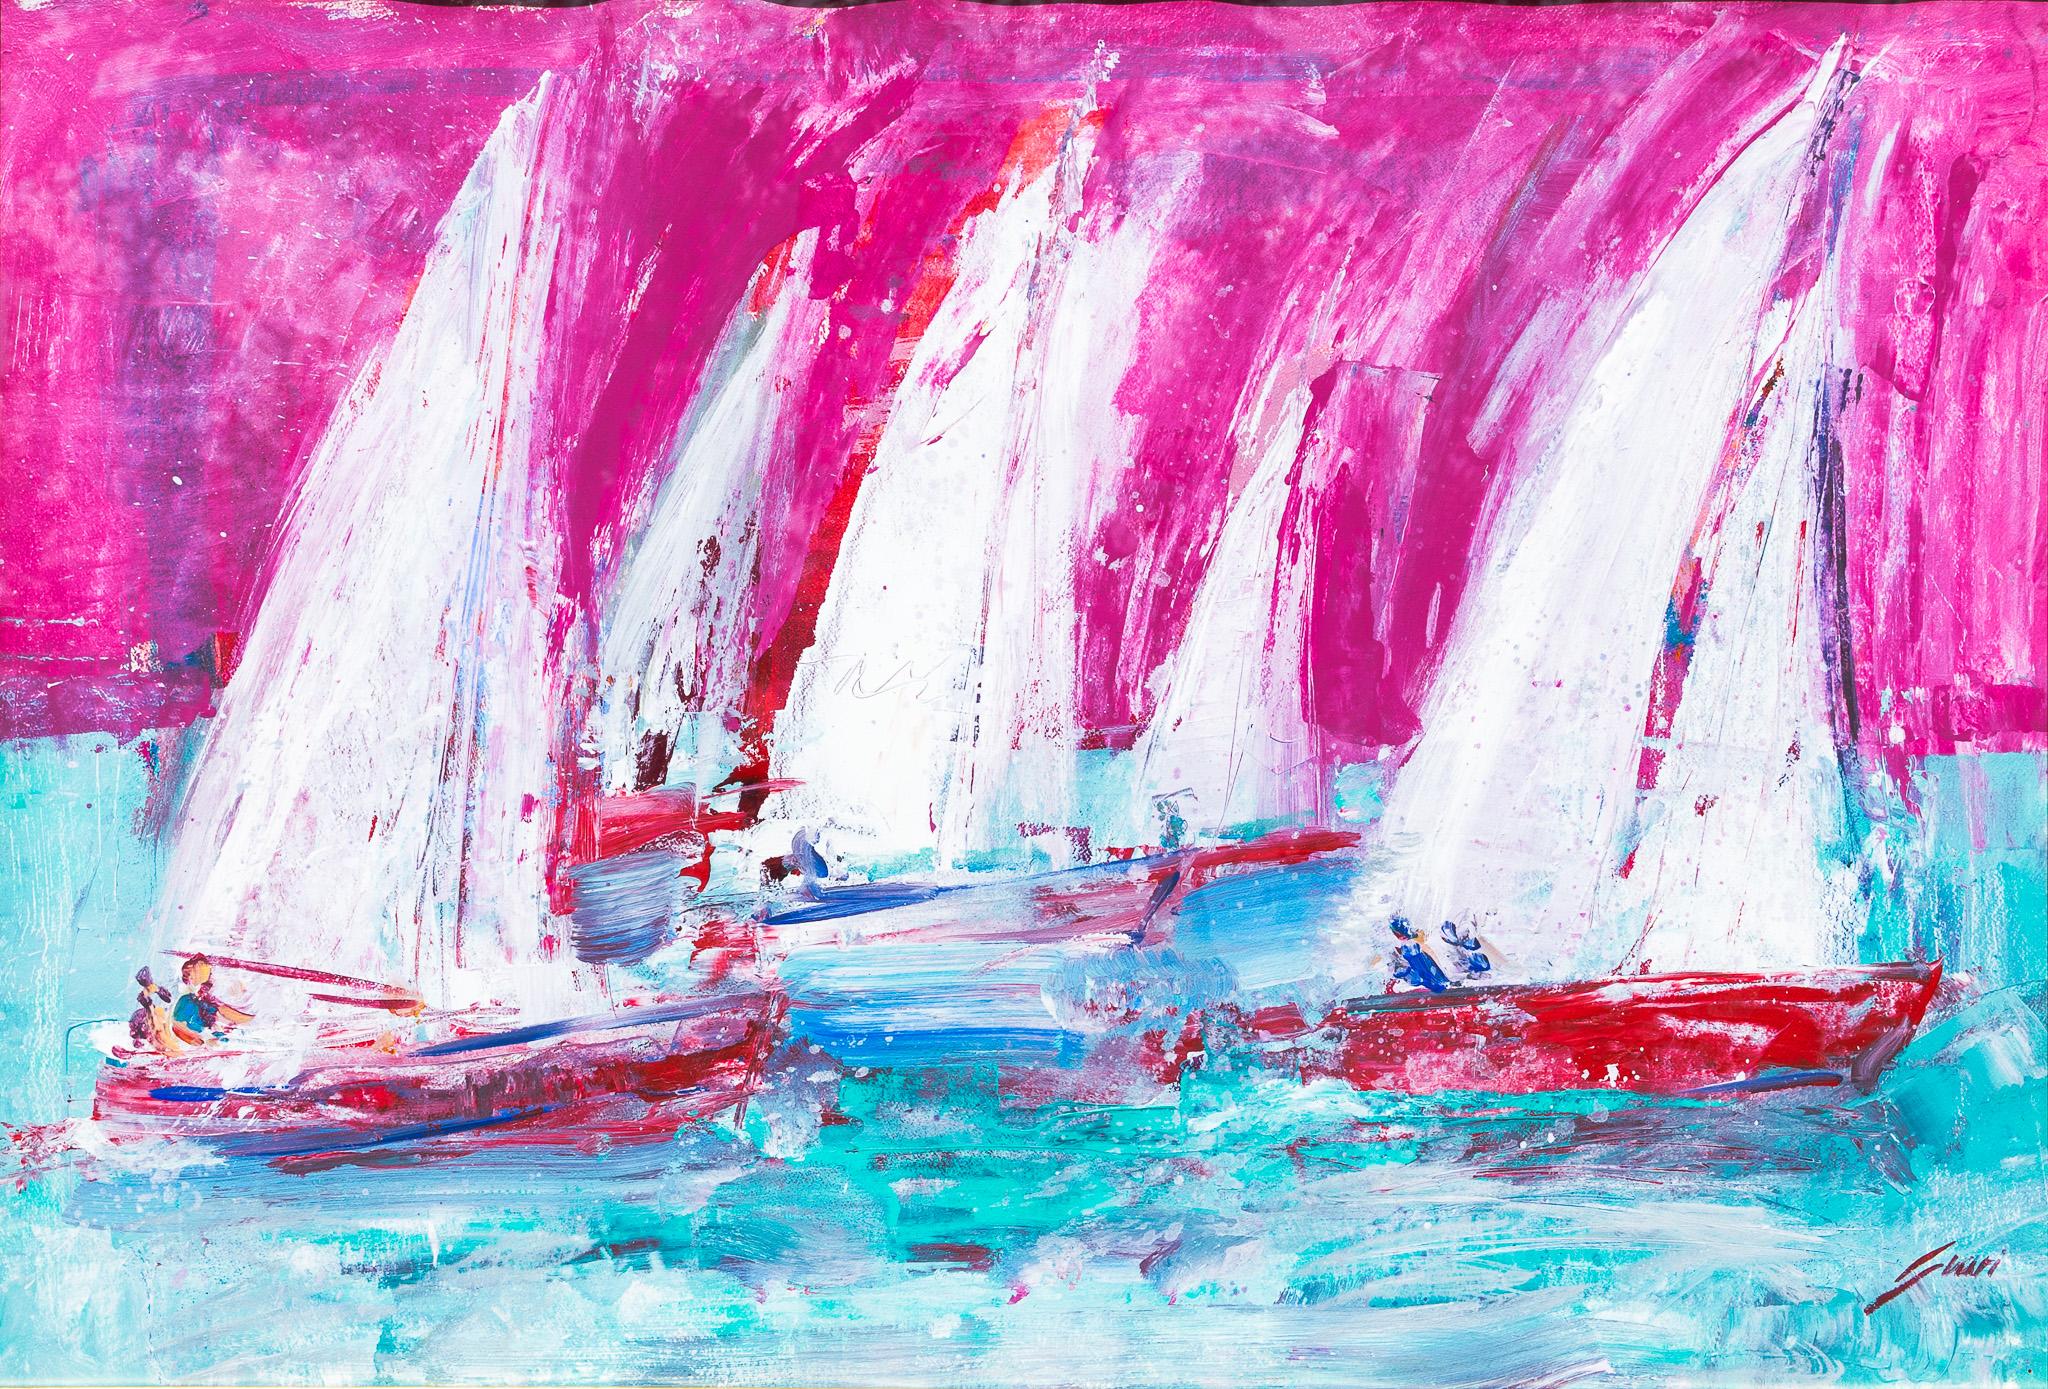 Pep Suari Landscape Painting - "Sailboats" Expressionist Seascape